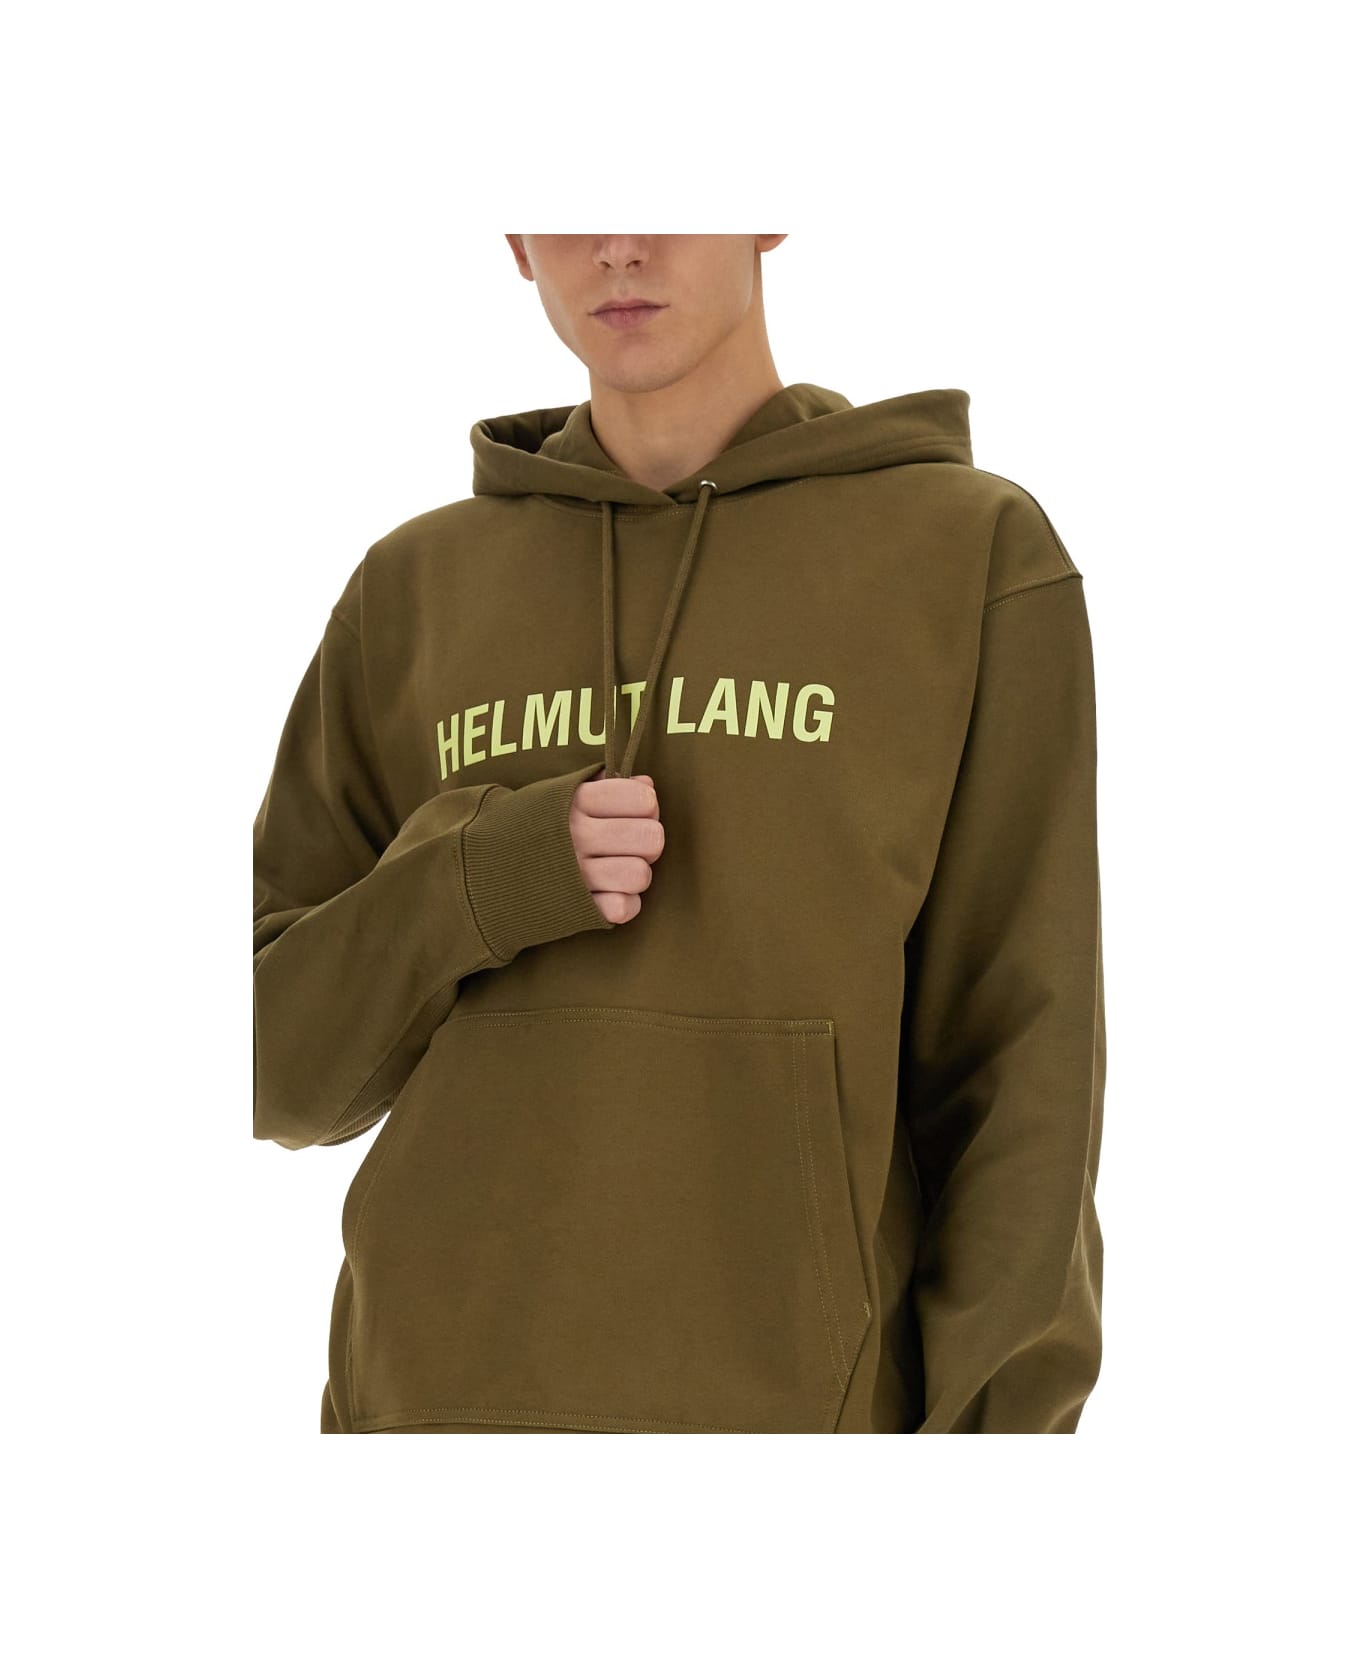 Helmut Lang Sweatshirt With Logo - MILITARY GREEN